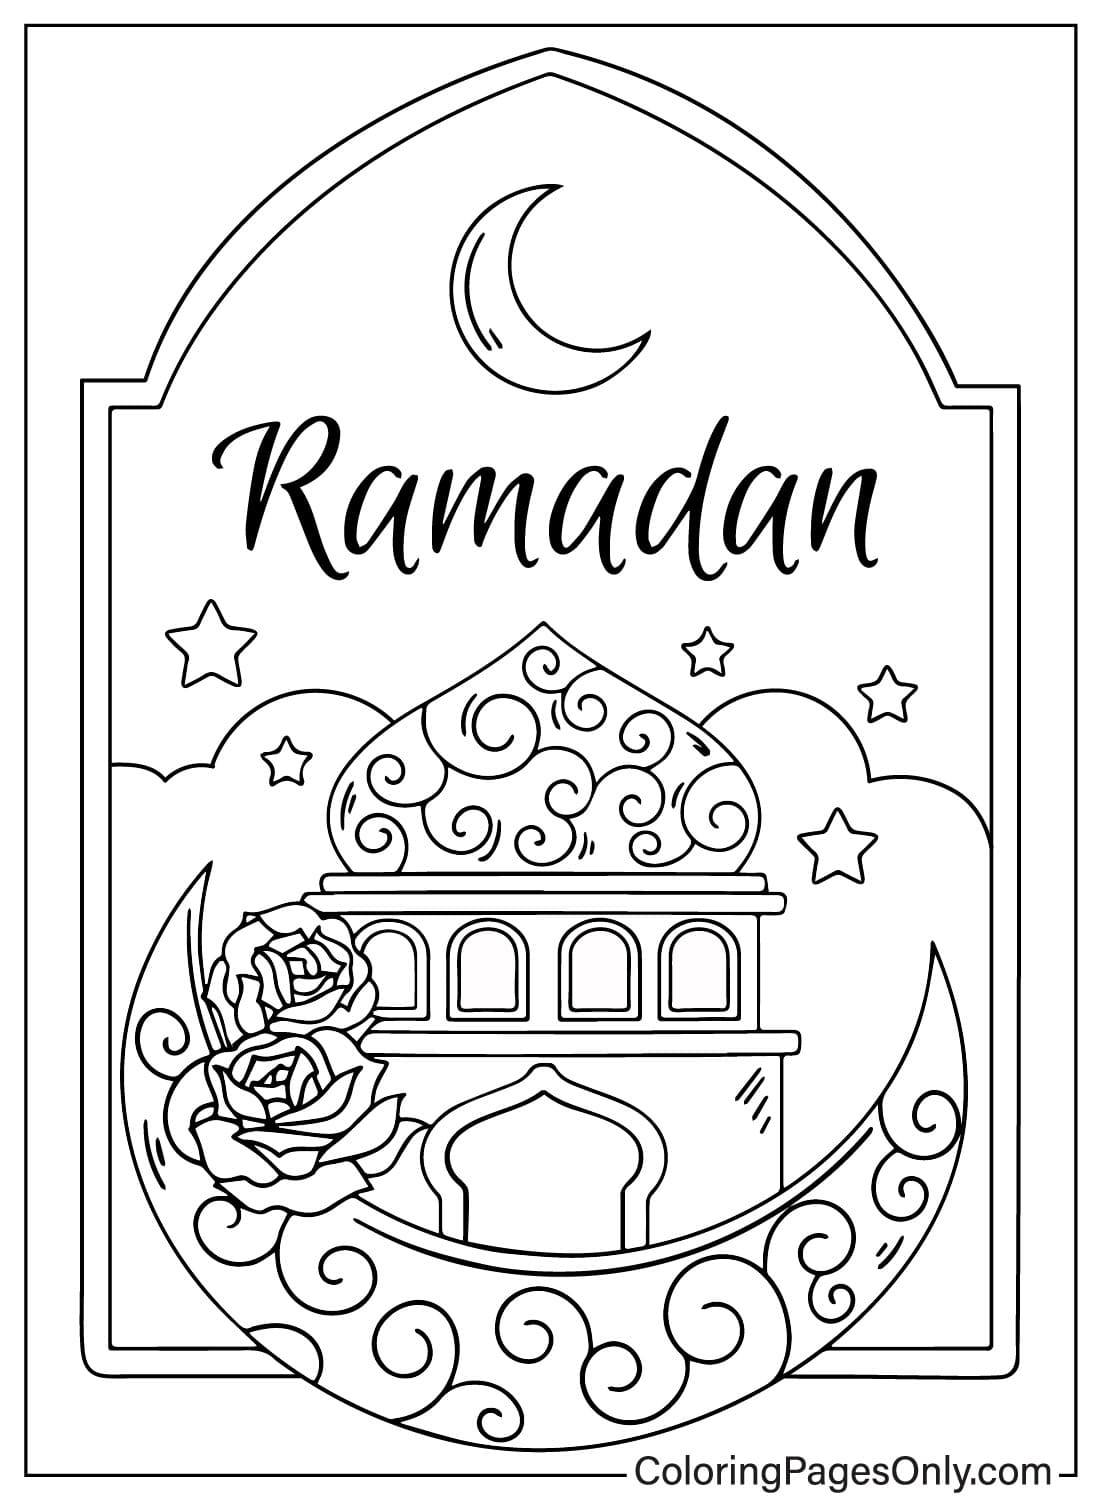 Ramadan-Malseite JPG aus dem Ramadan